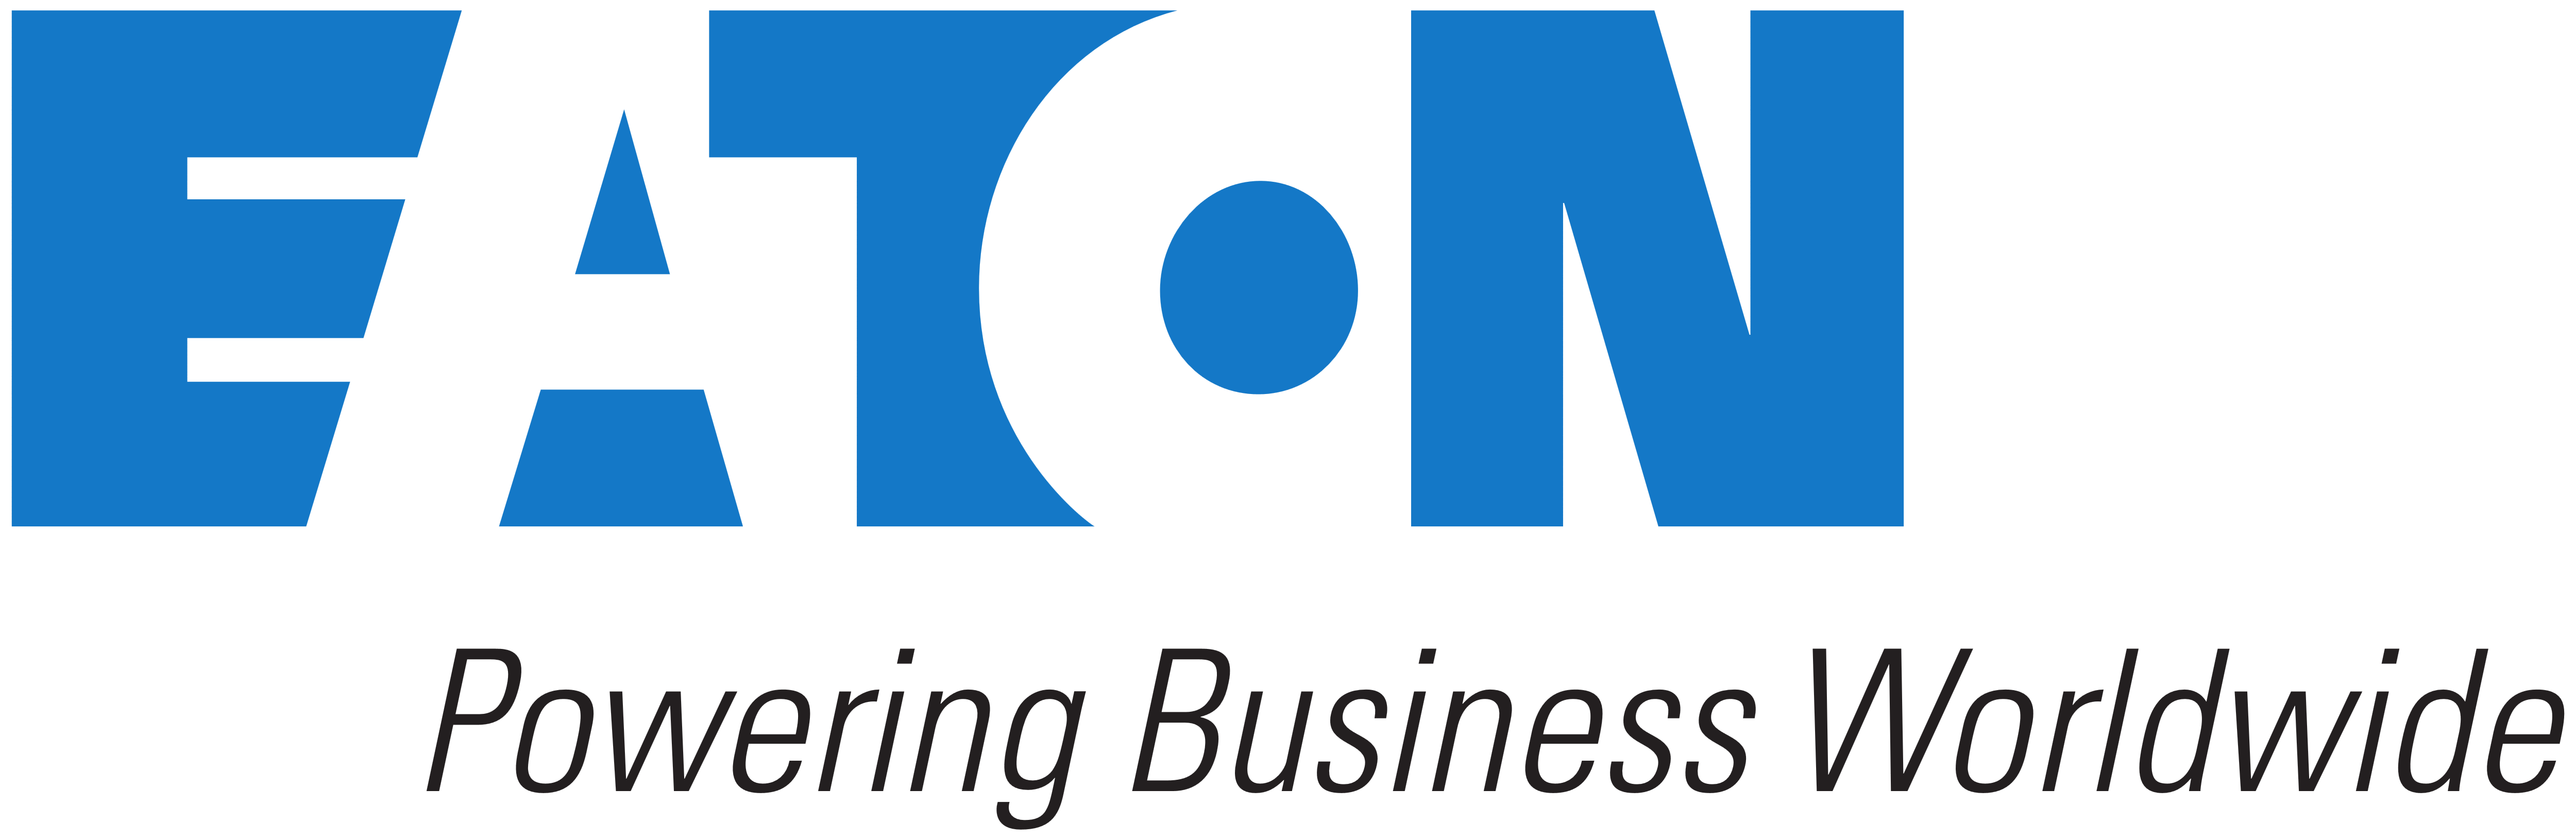 Eaton Logo Wallpaper